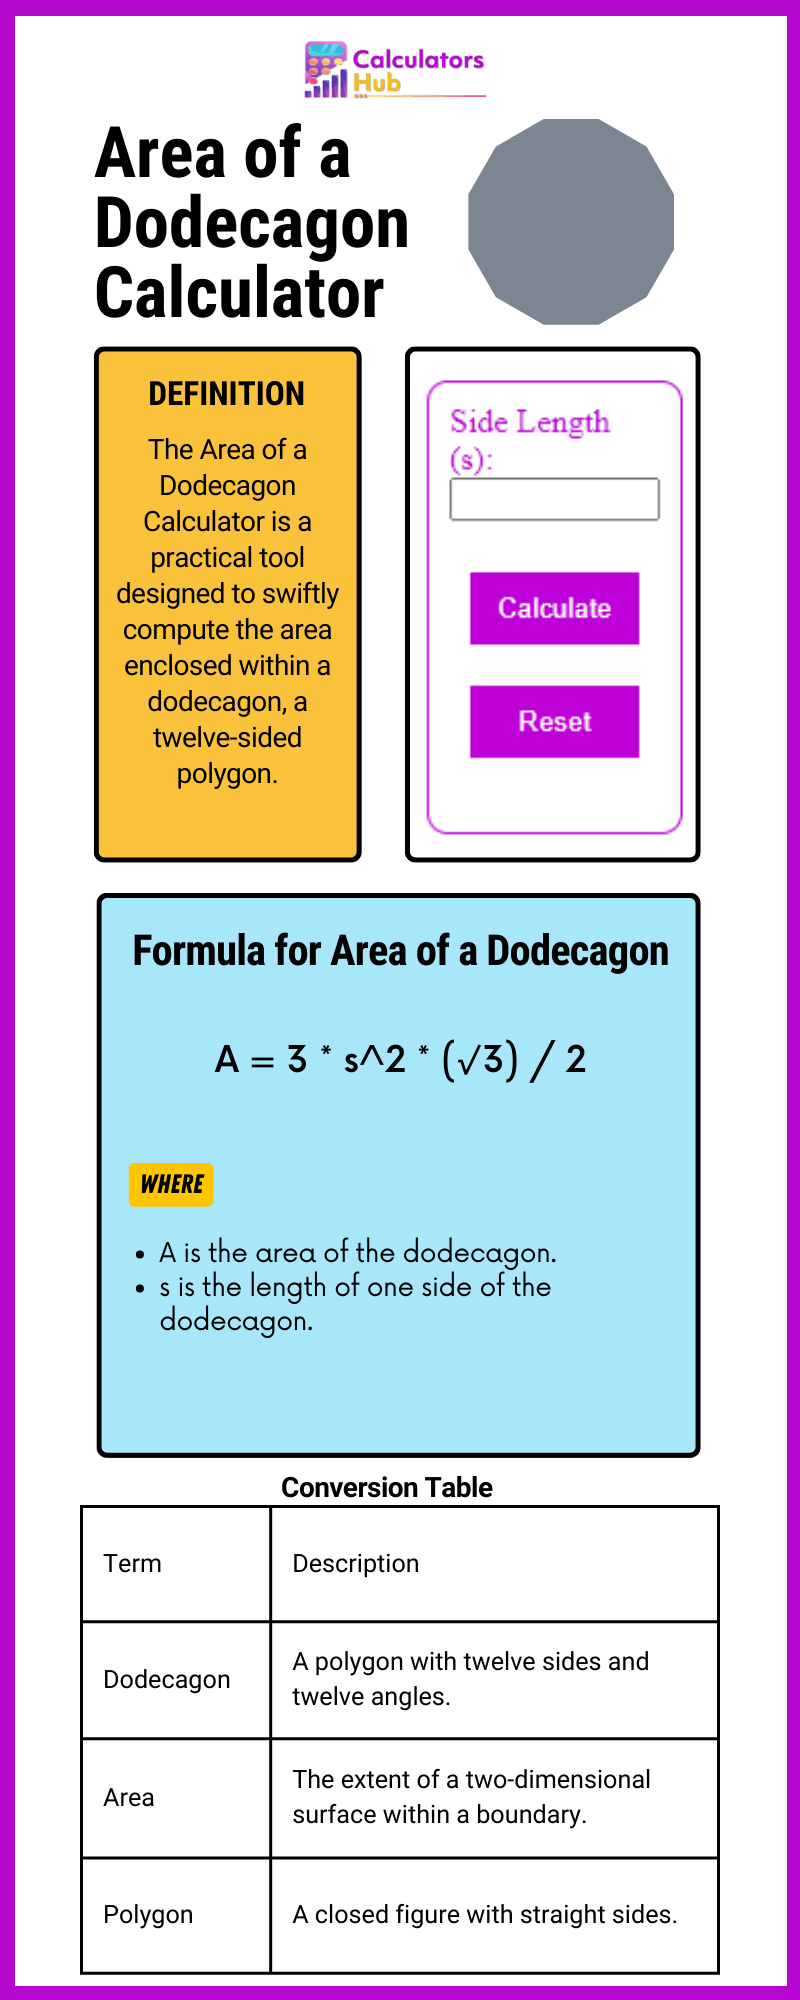 Area of a Dodecagon Calculator